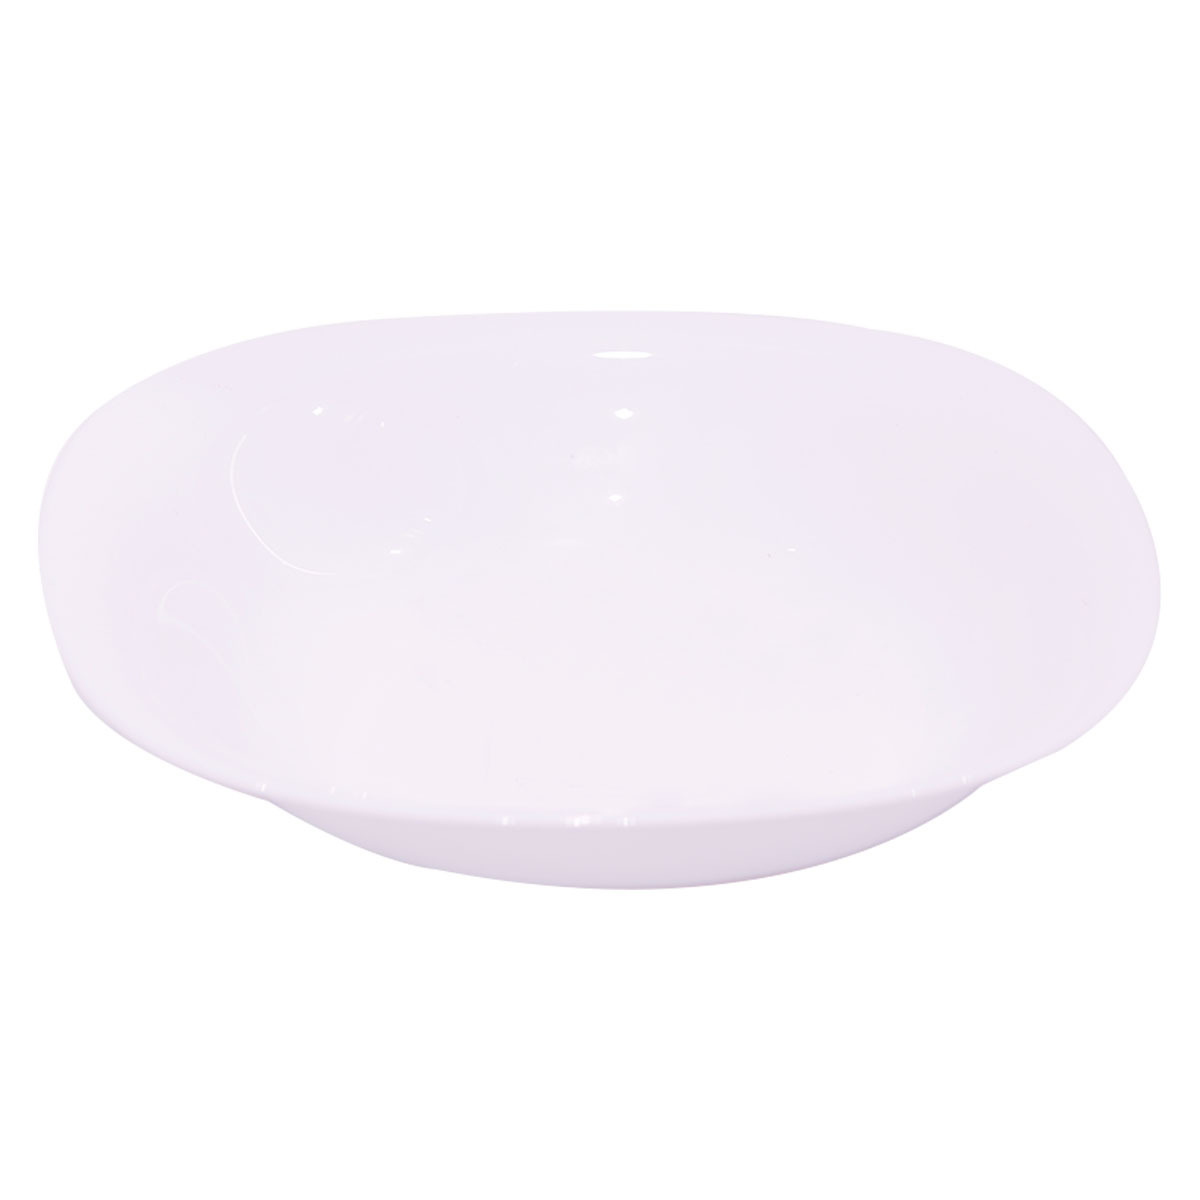 Luminarc Soup Plate Carine White 21cm